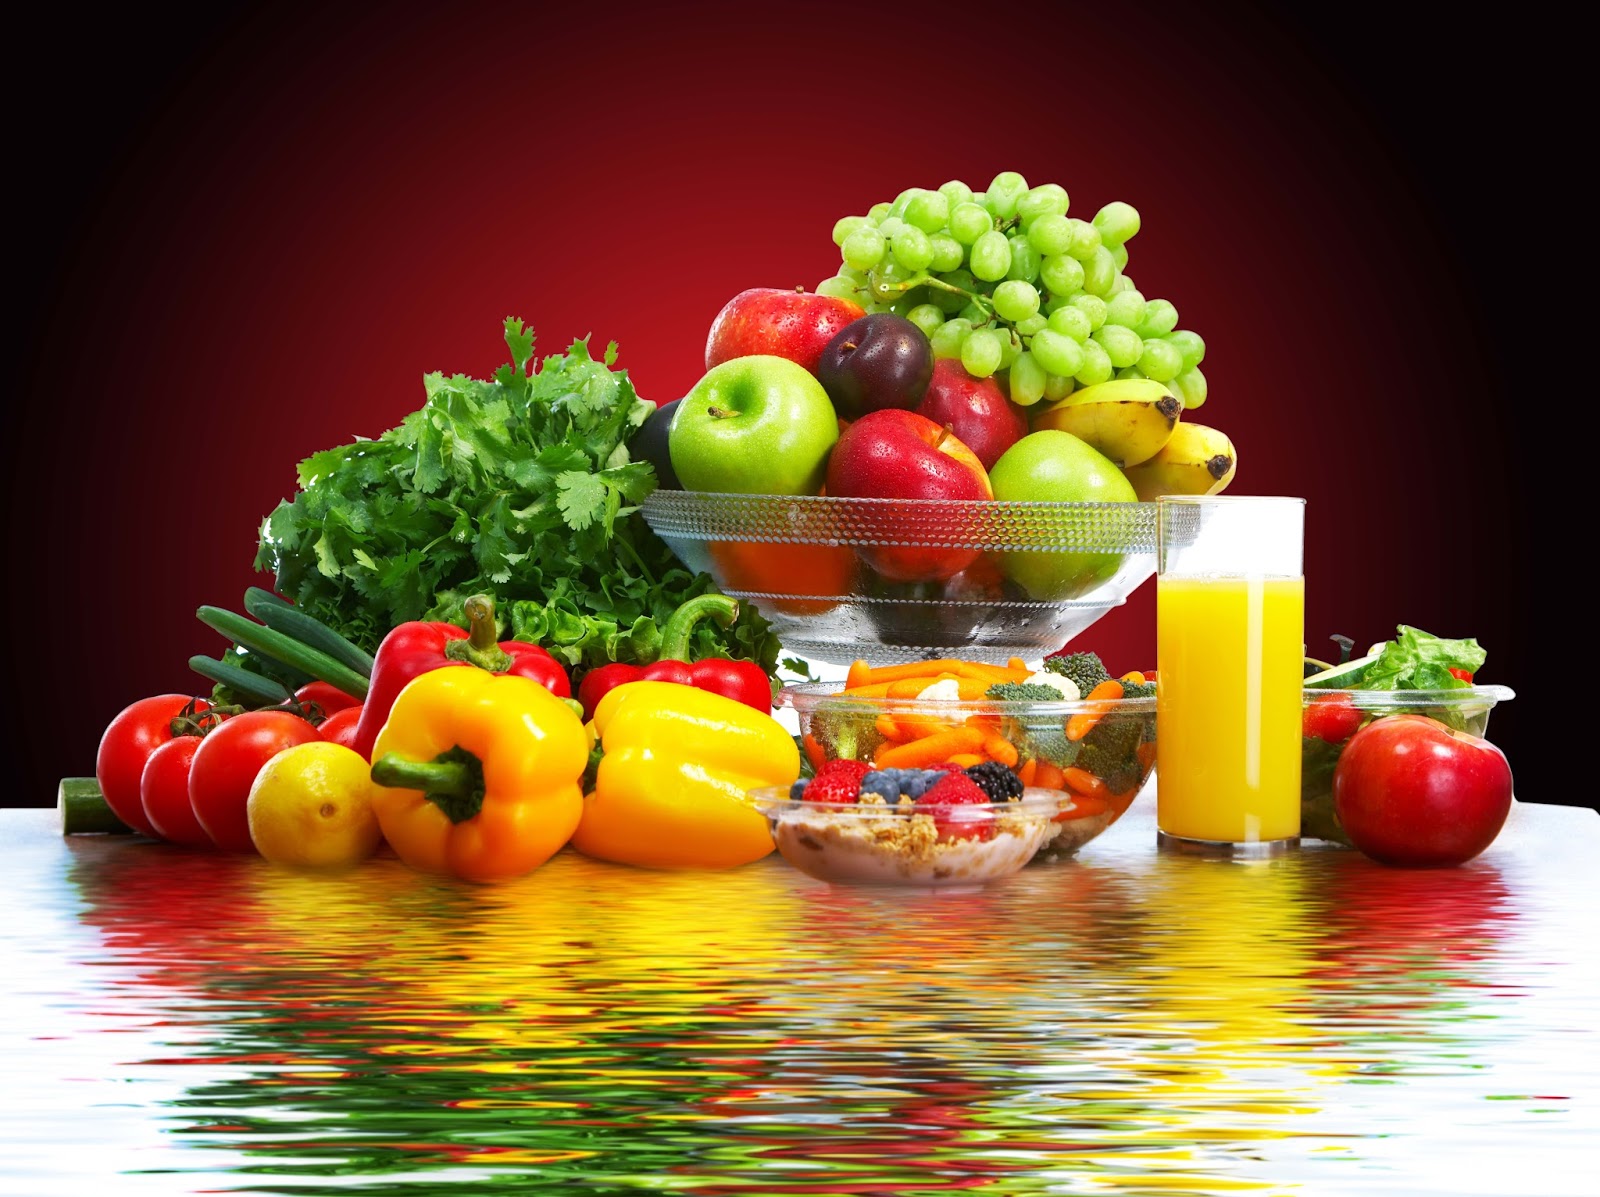 papel pintado de frutas,alimentos naturales,producto,comida,vegetal,comida integral